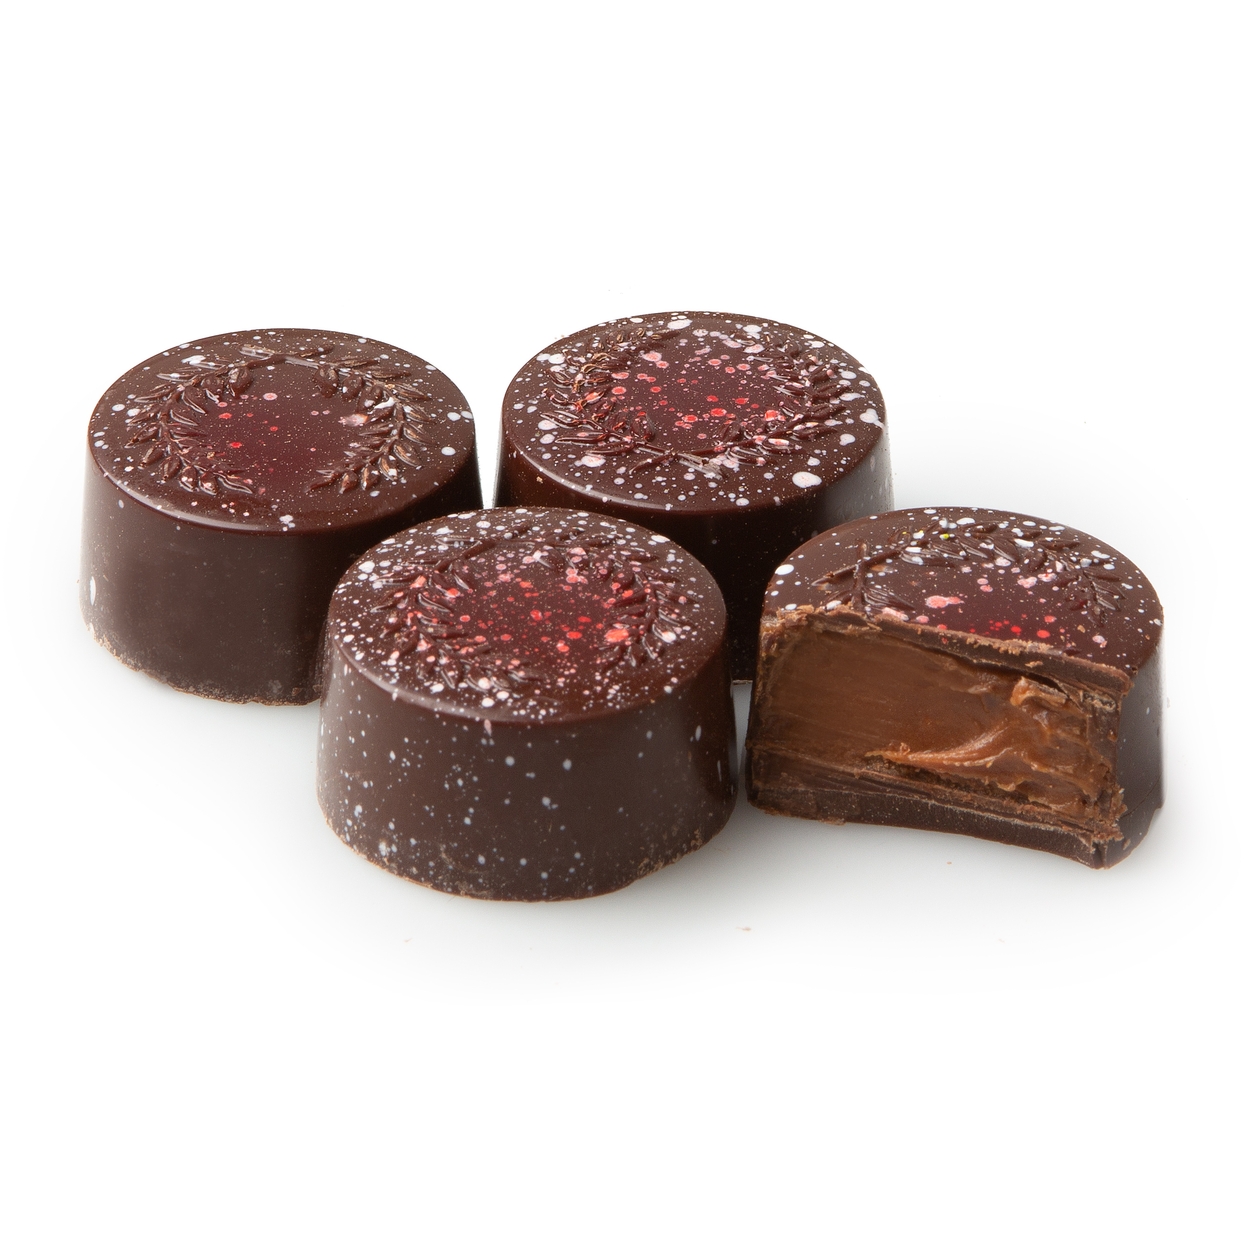 Hand Made Dark Chocolate Truffles - Chocolate Caramel • Oh! Nuts